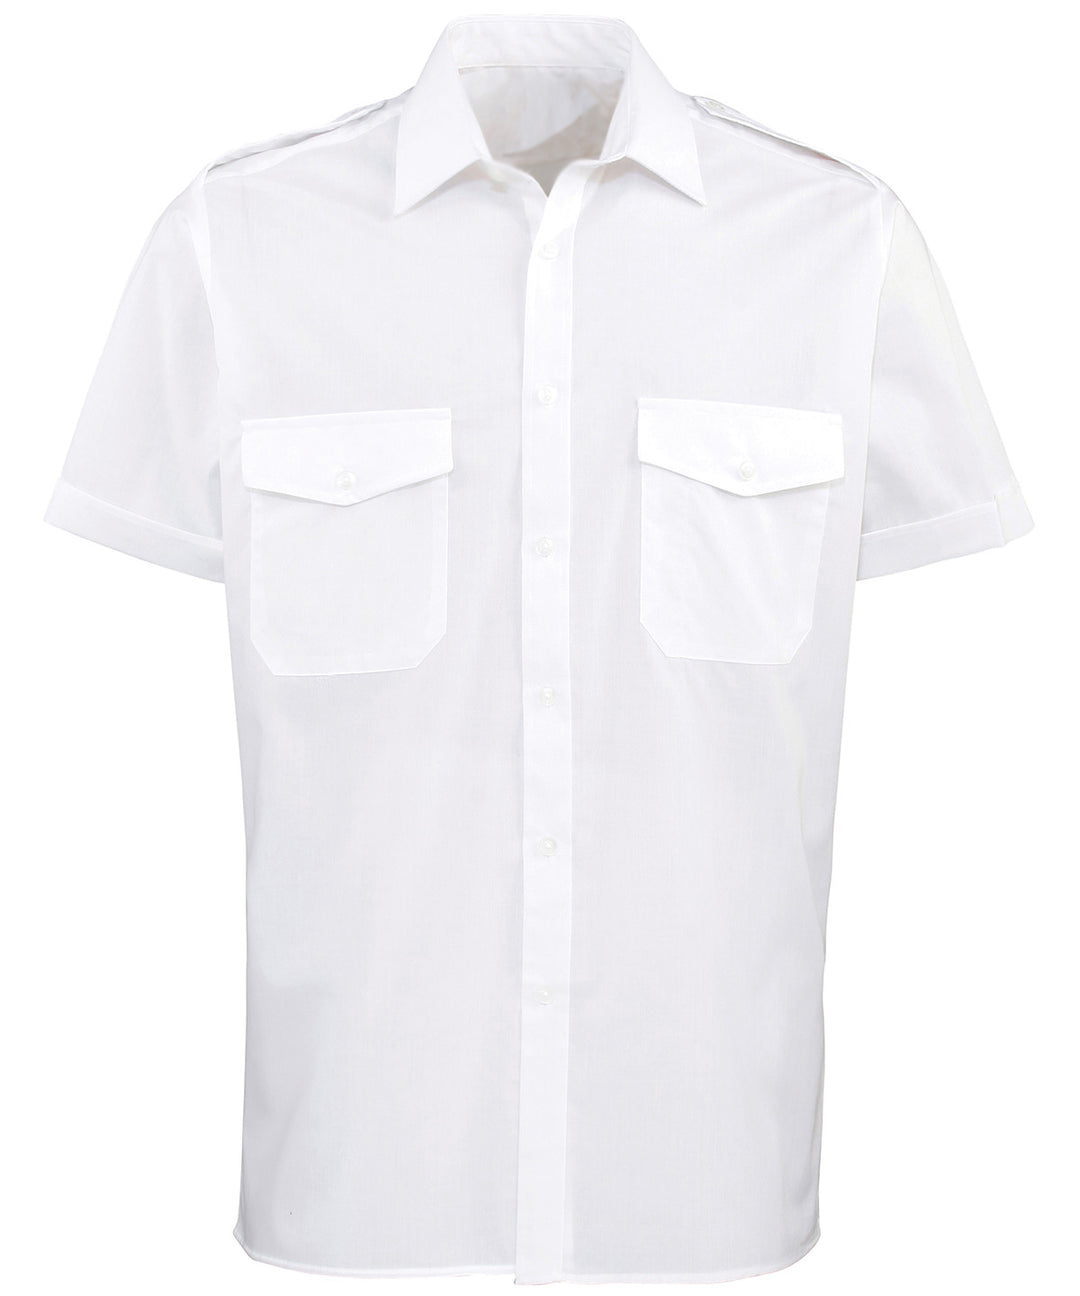 Pilot Shirt Short Sleeve (White)